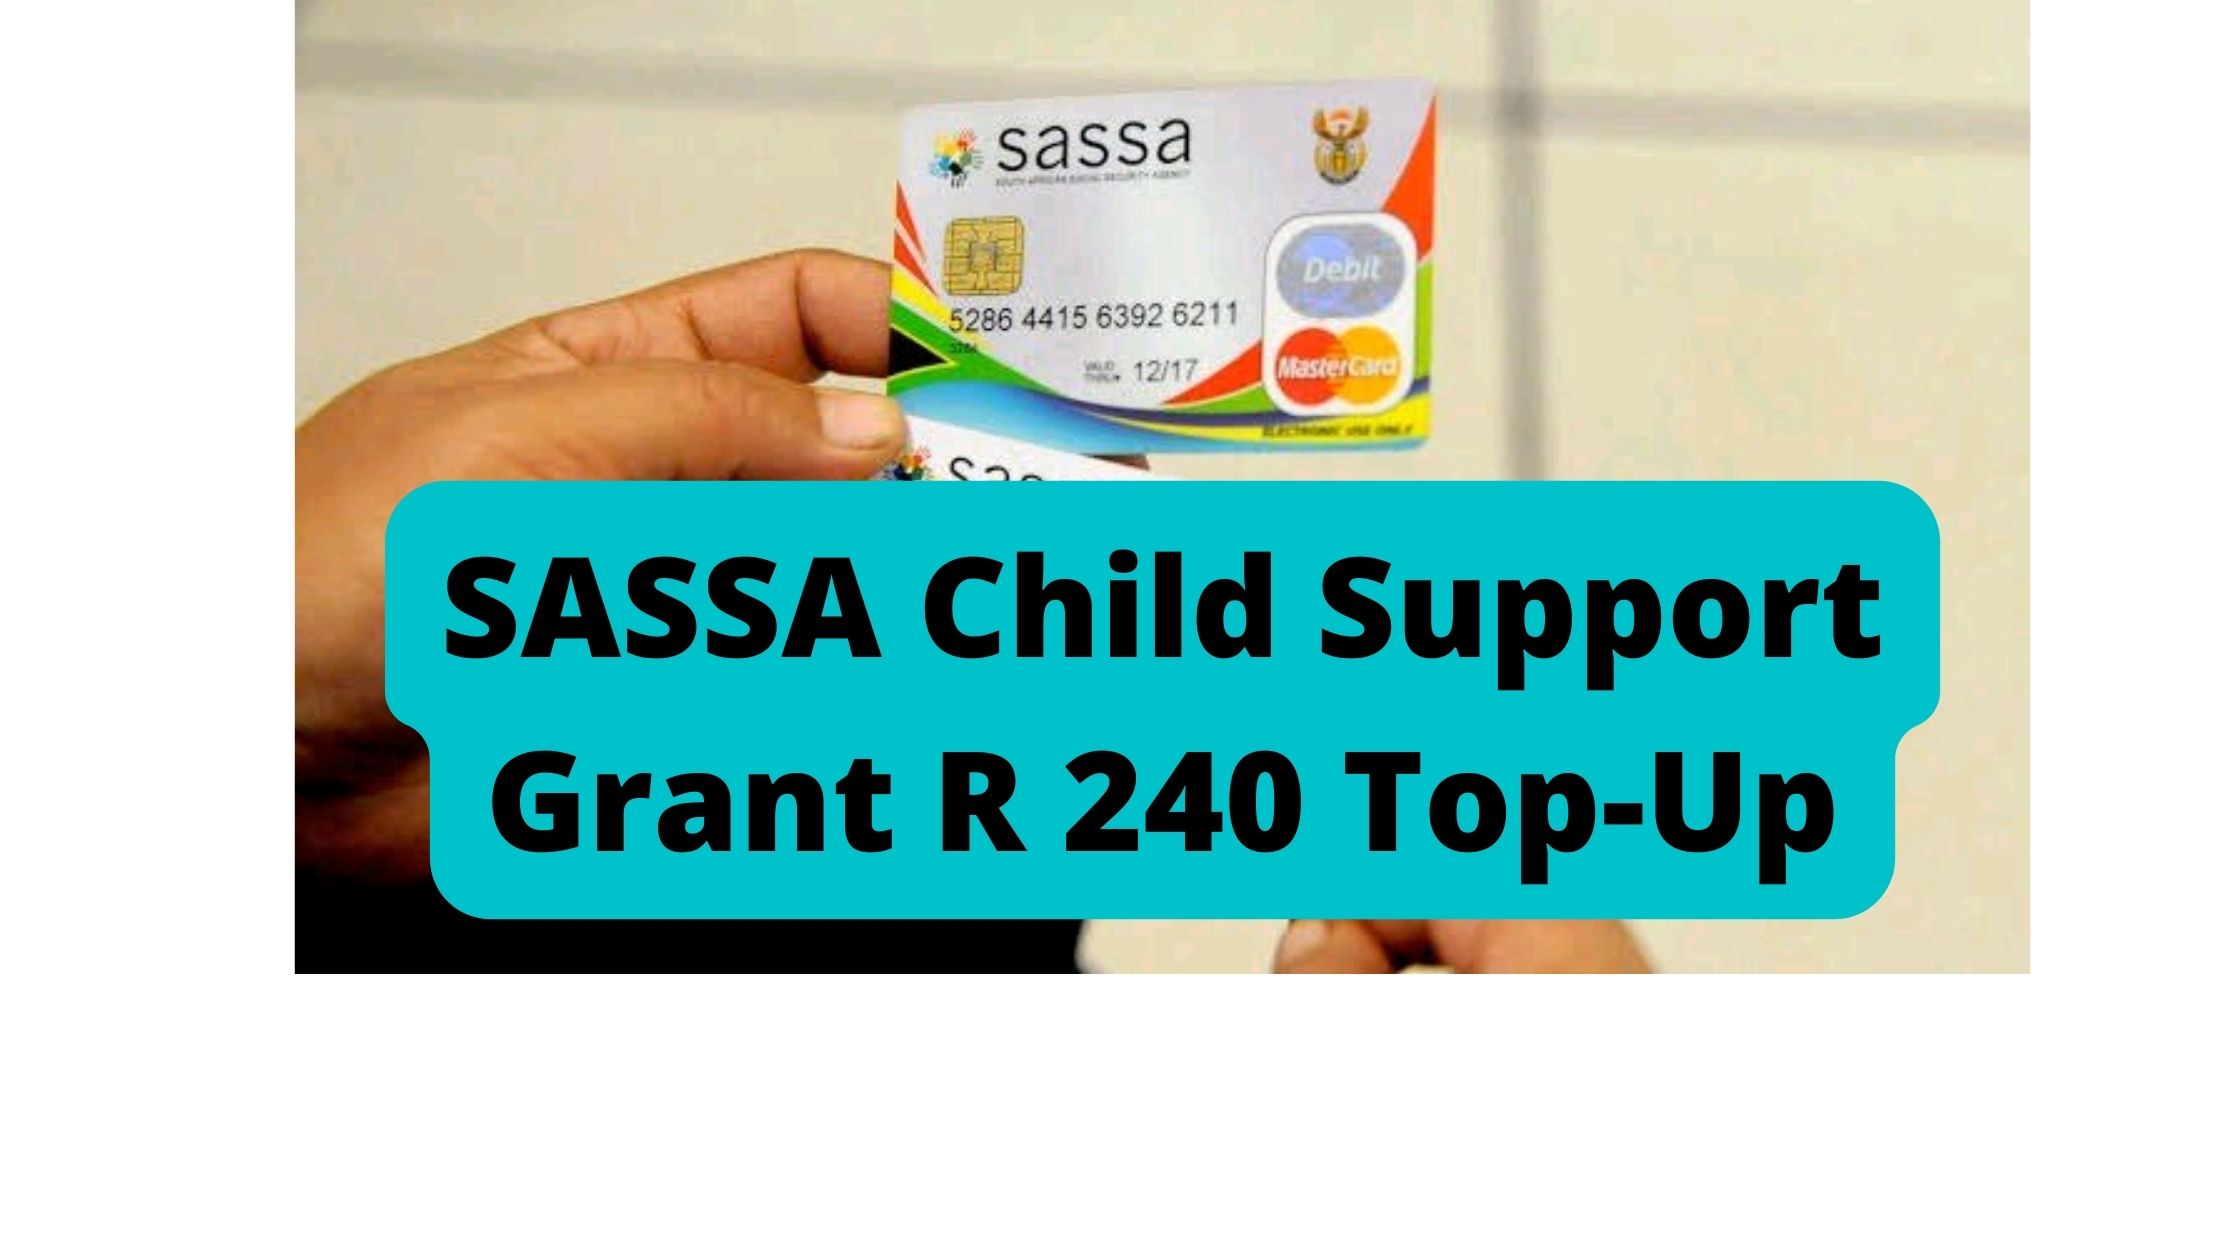 SASSA Child Support Grant R 240 Top-Up